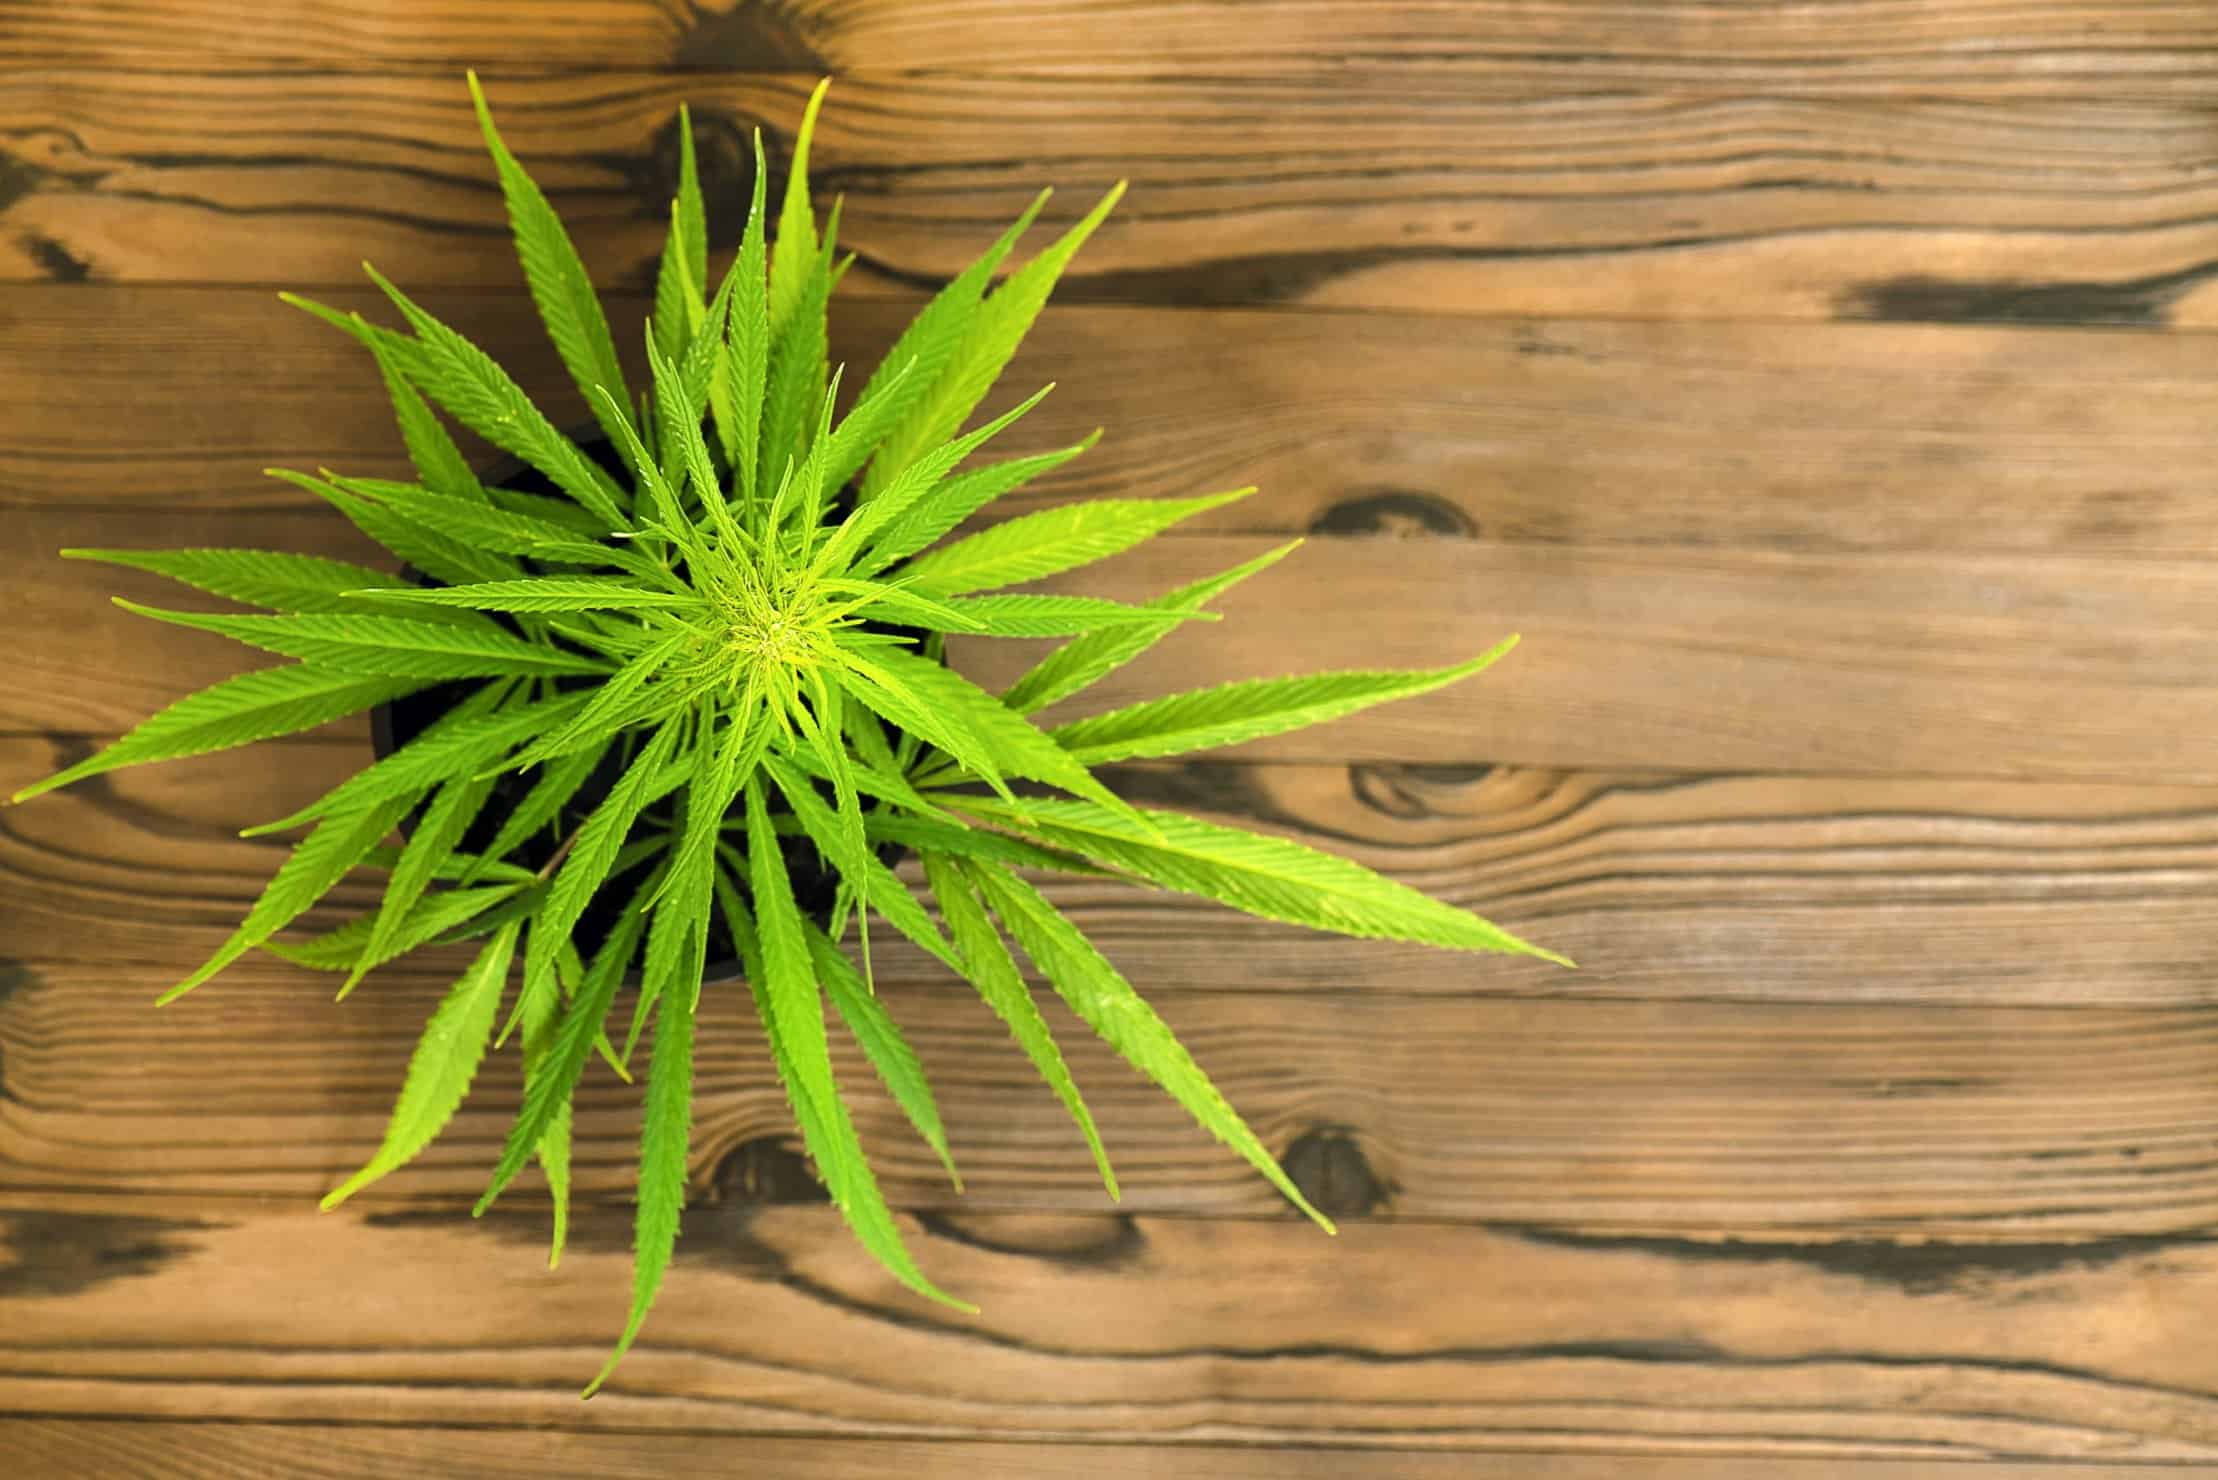 How to Grow Shorter Cannabis Plants